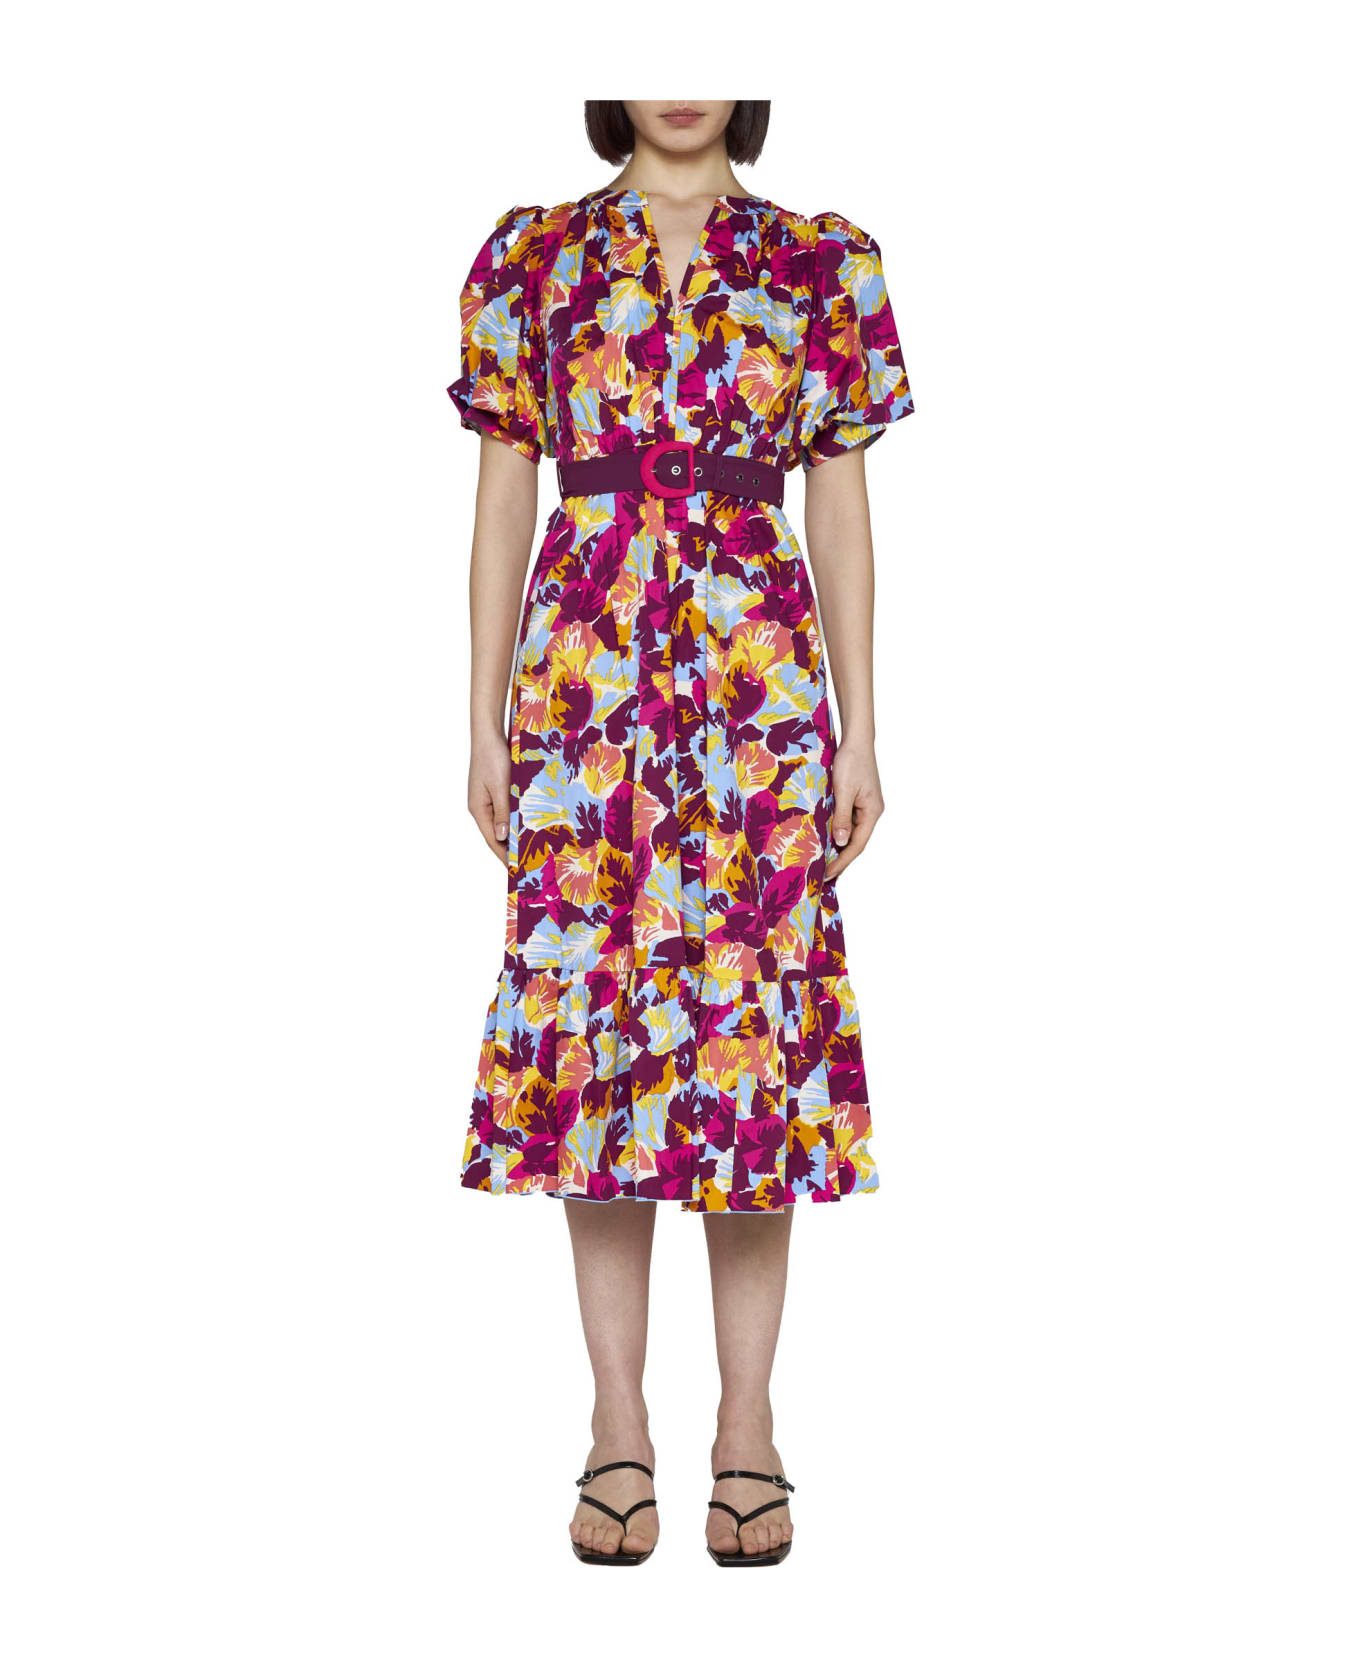 Diane Von Furstenberg Dress - Grdn petals medgrdn petals sm